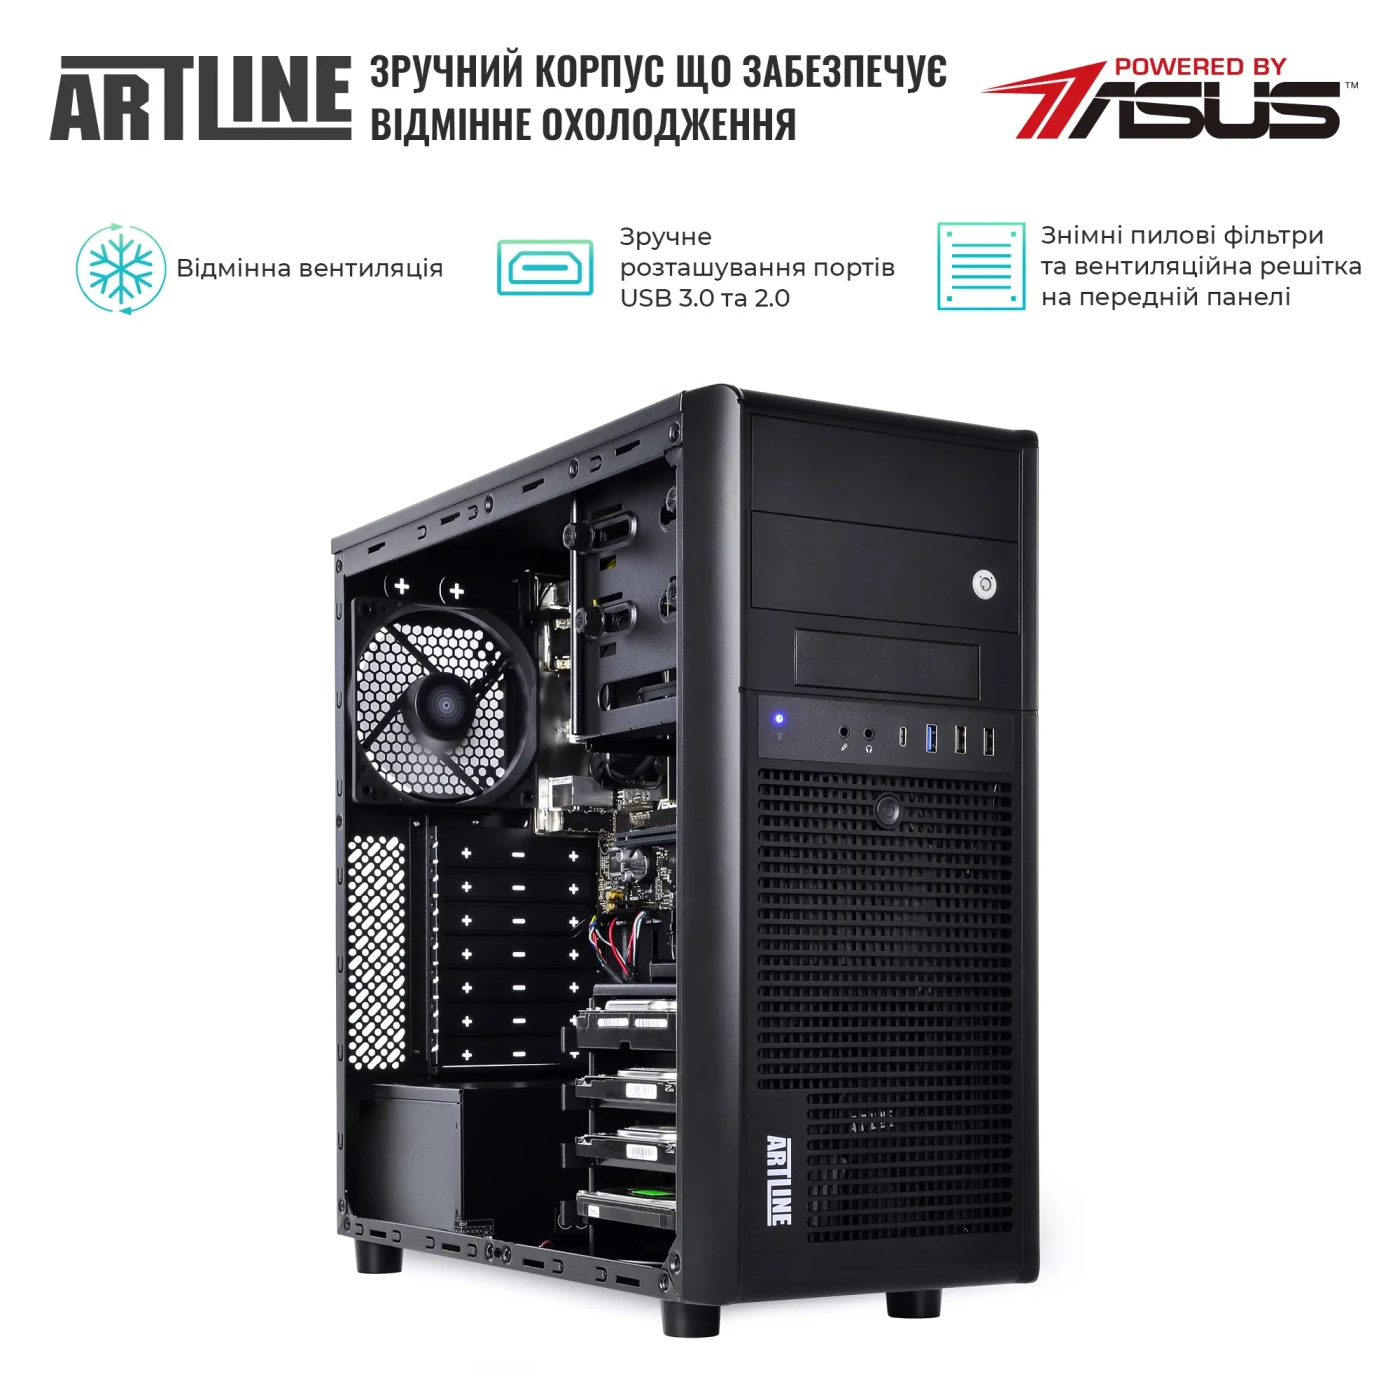 Купити Сервер ARTLINE Business T37 (T37v35) - фото 3